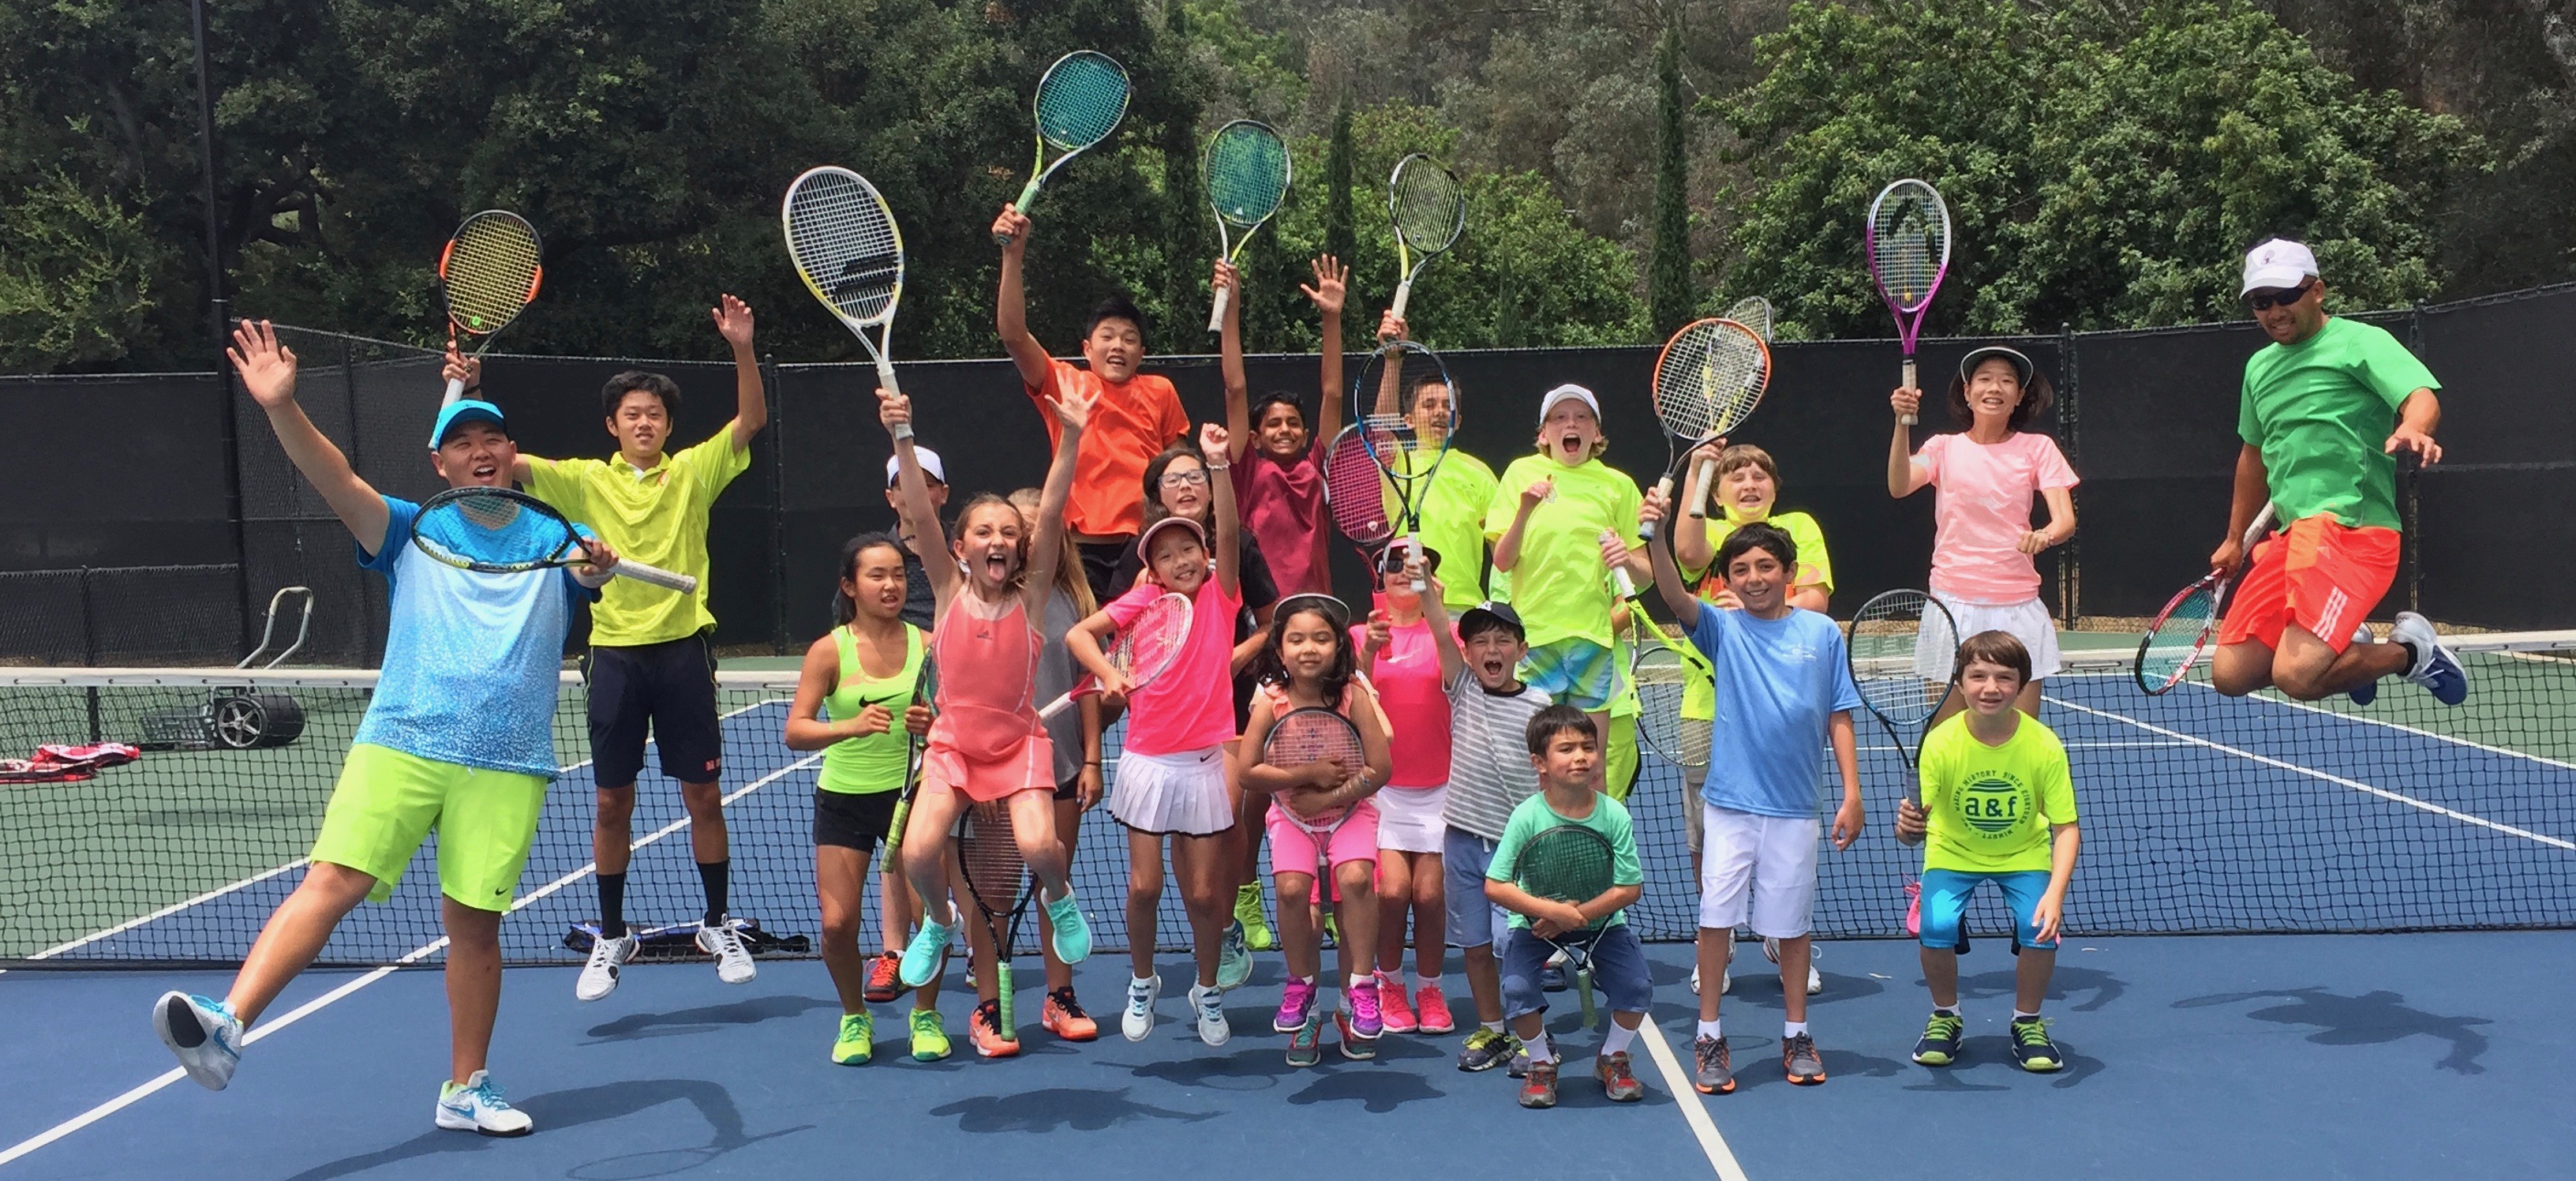 Tennis Junior Summer Camp Flint Canyon Tennis Club